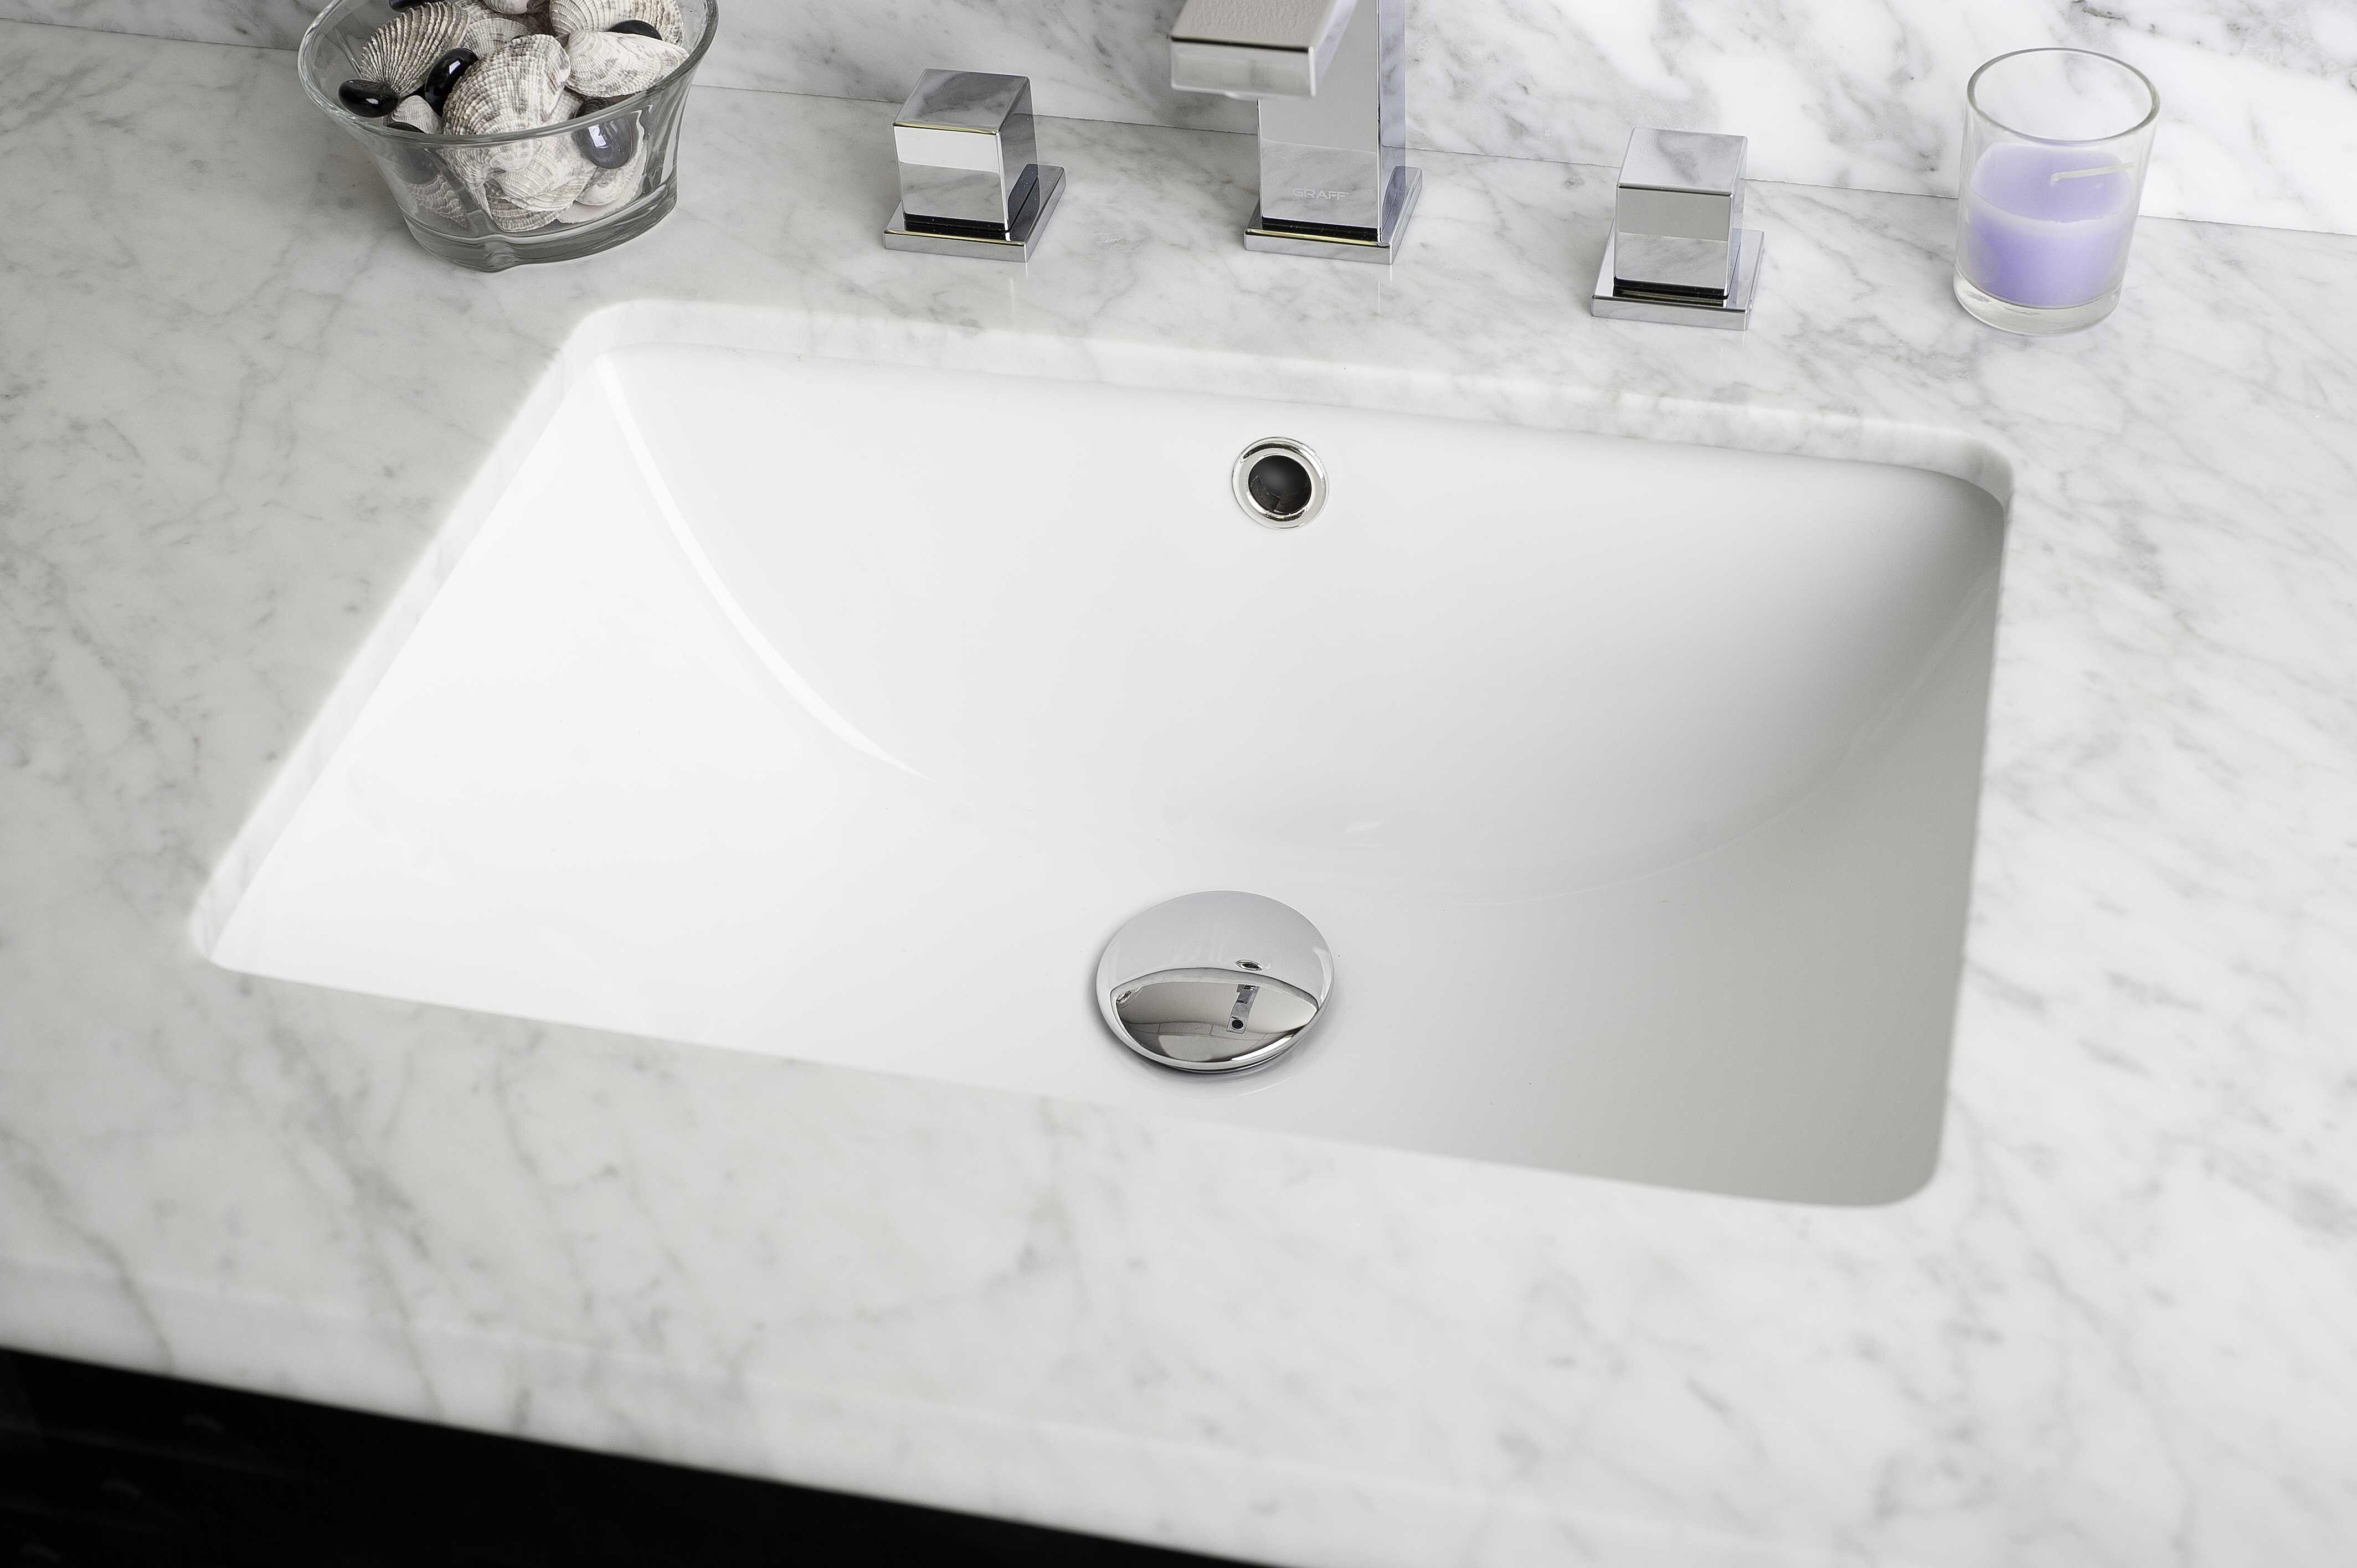 Royalpurplebathkitchen Ceramic Rectangular Undermount Bathroom Sink With Overflow Wayfair